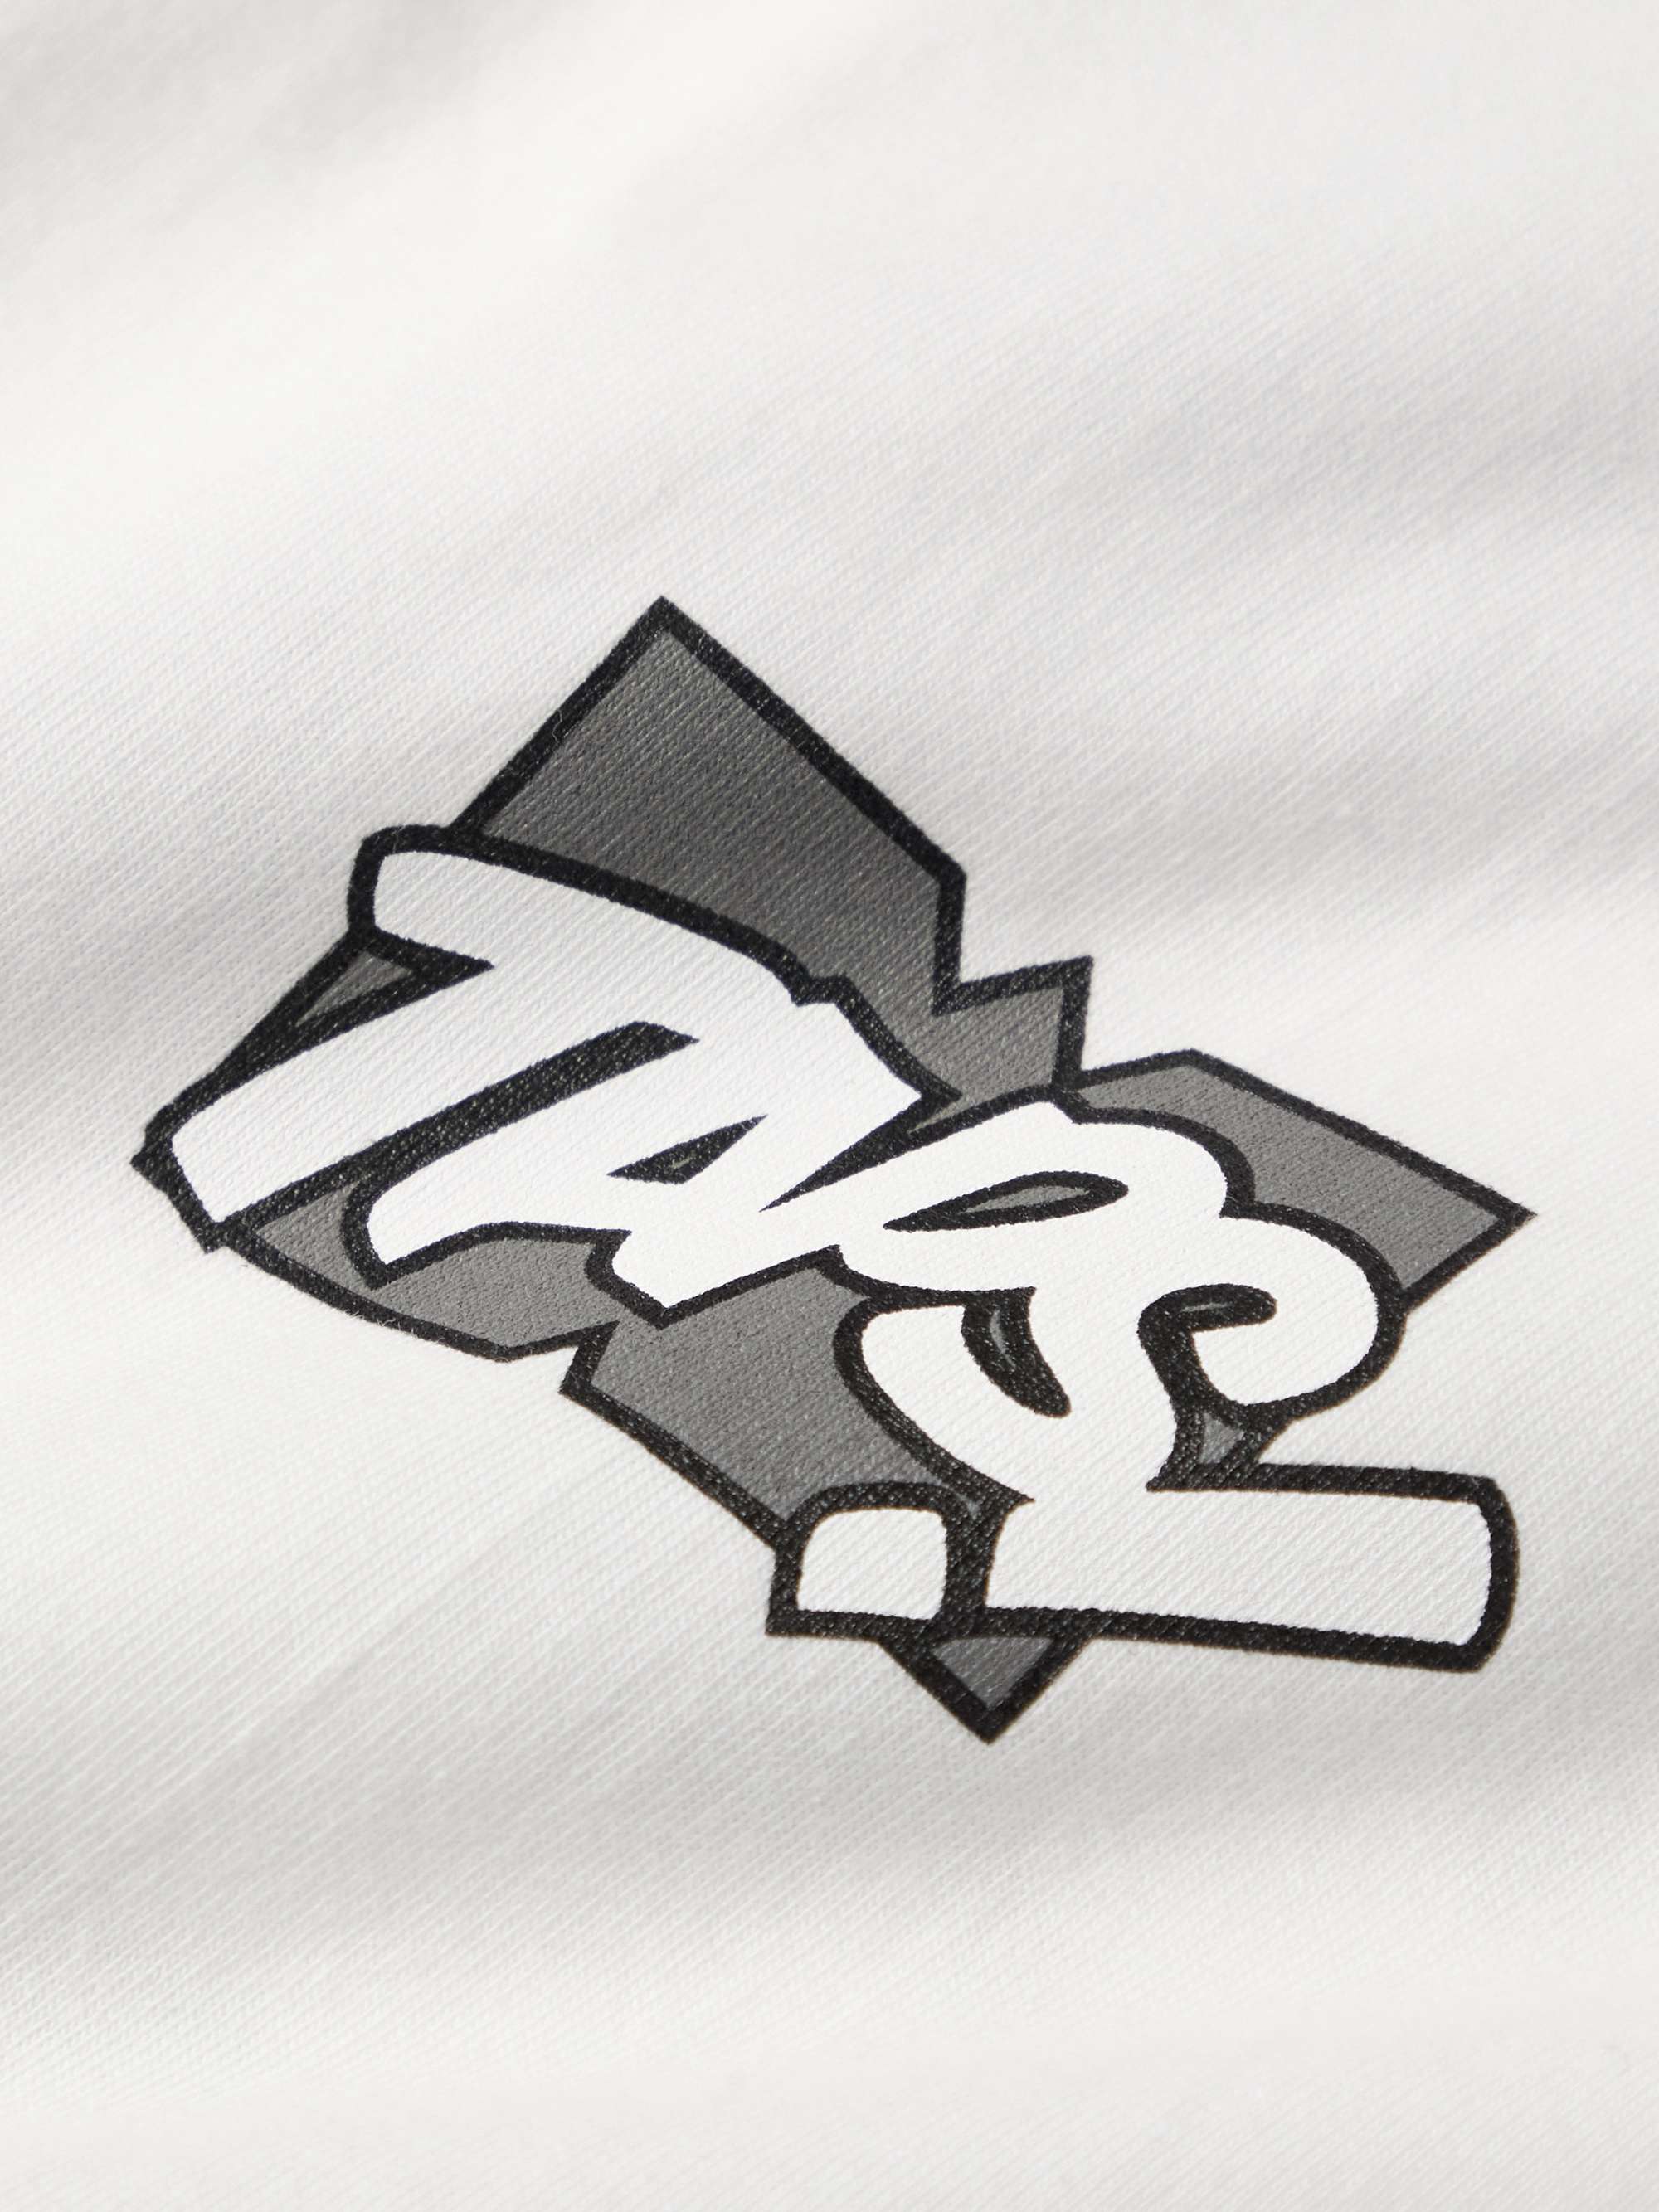 WTAPS® Logo-Print Cotton-Jersey T-Shirt